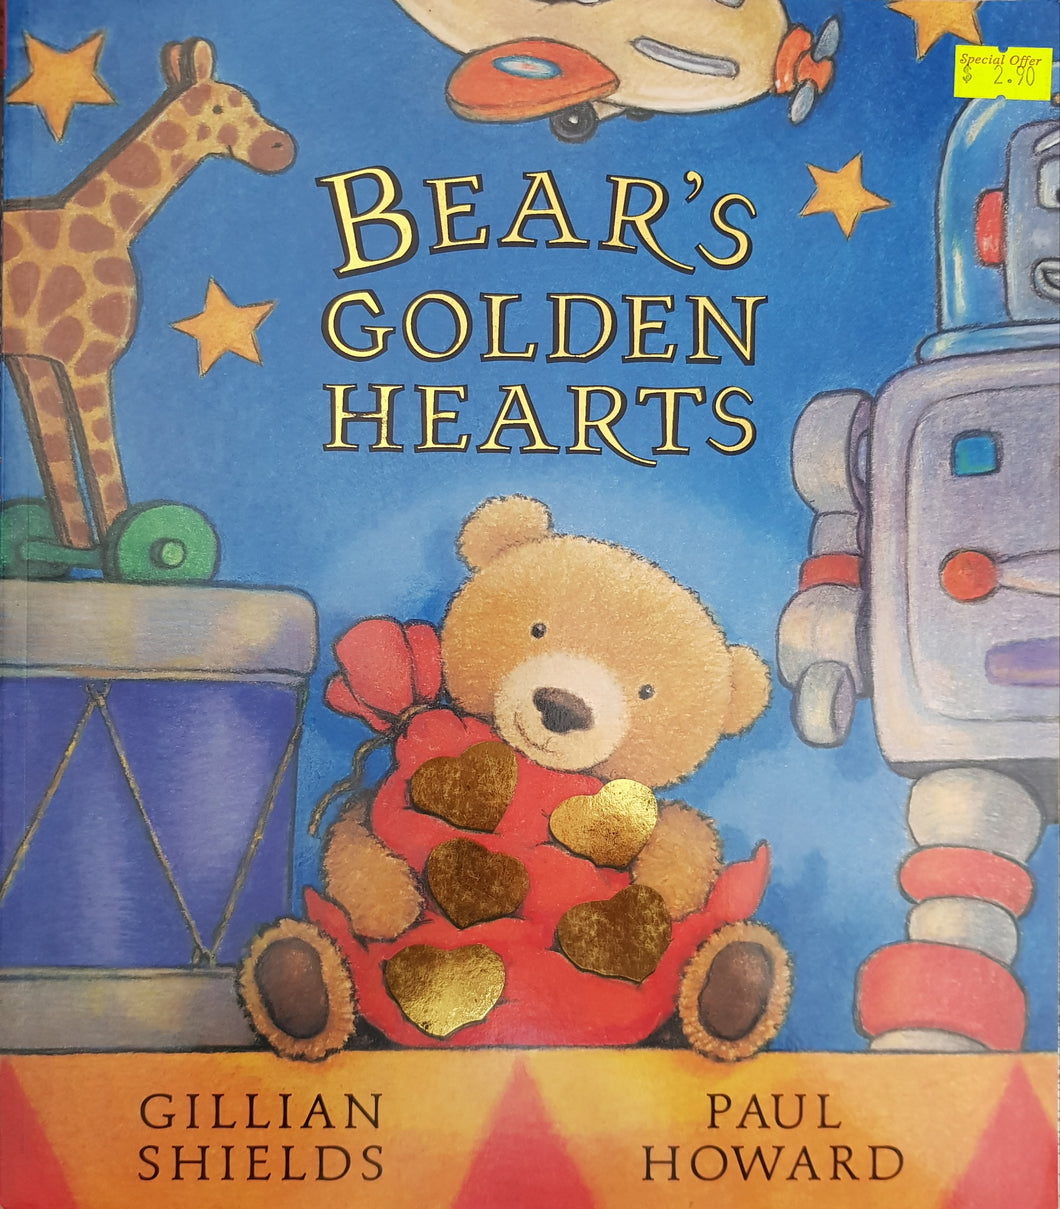 Bear's Golden Hearts - Gillian Shields & Paul Howard